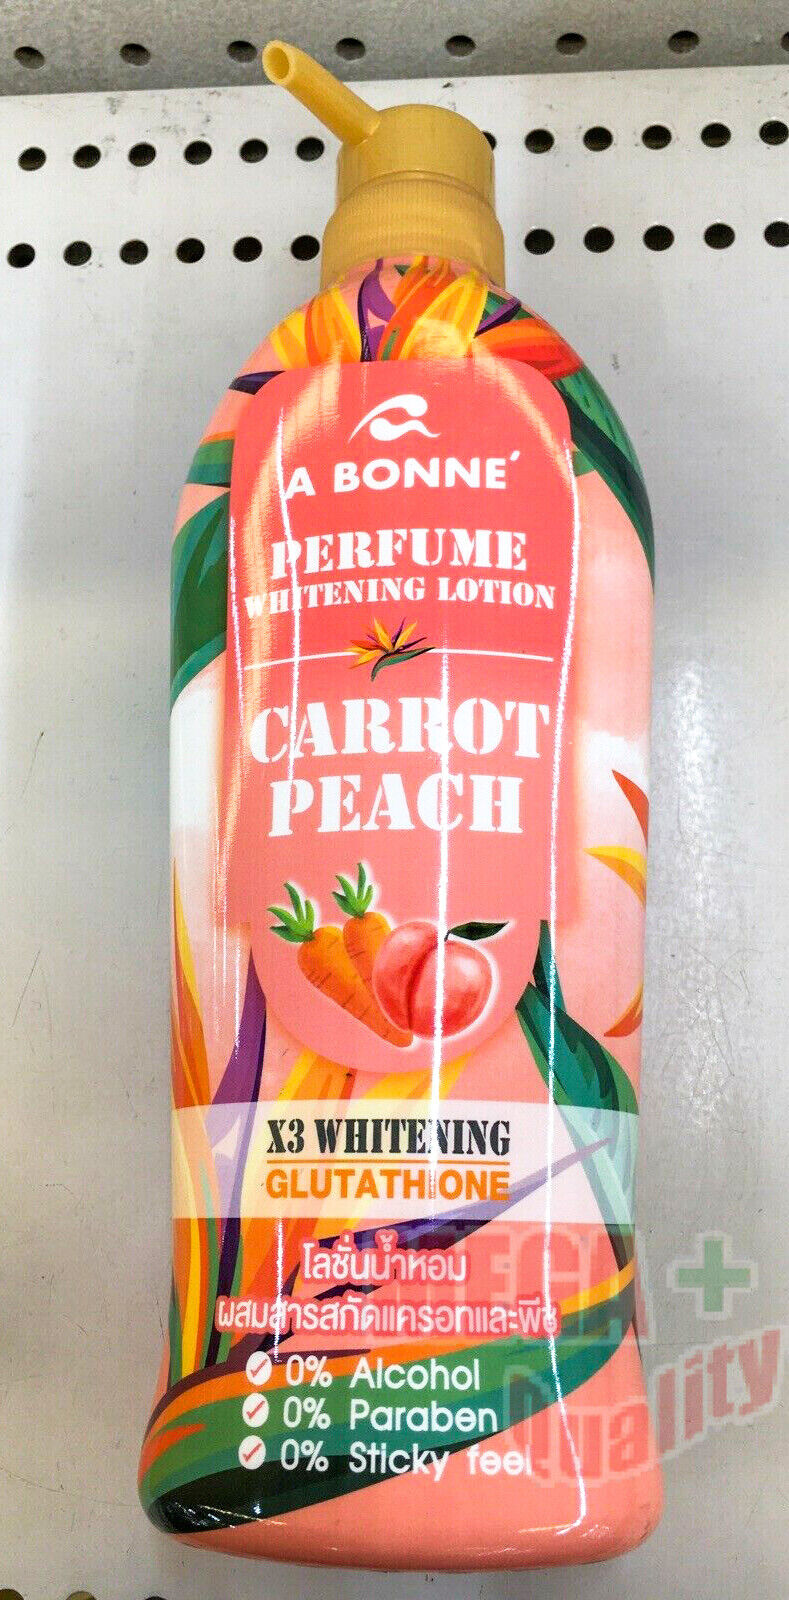 a Bonne Perfume Whitening Lotion Carrot Peach 500ml X 2 for sale 